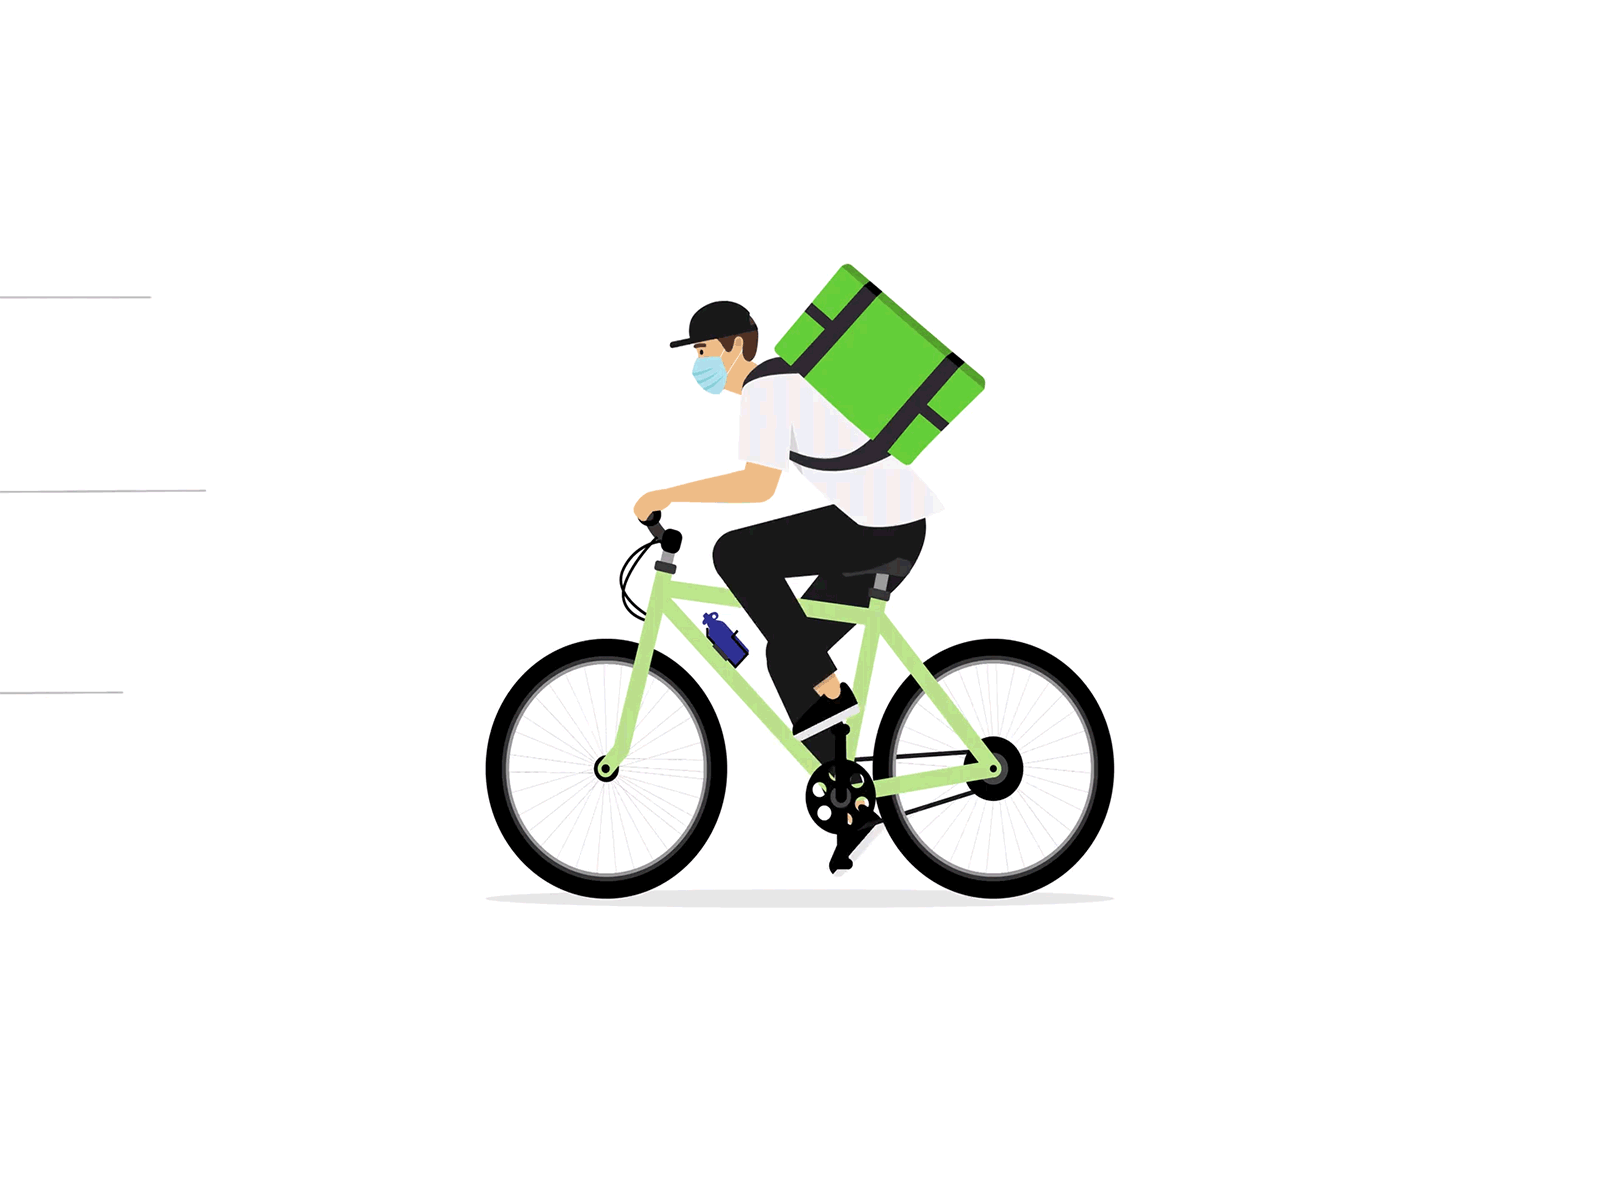 Deliveryman rides on bike